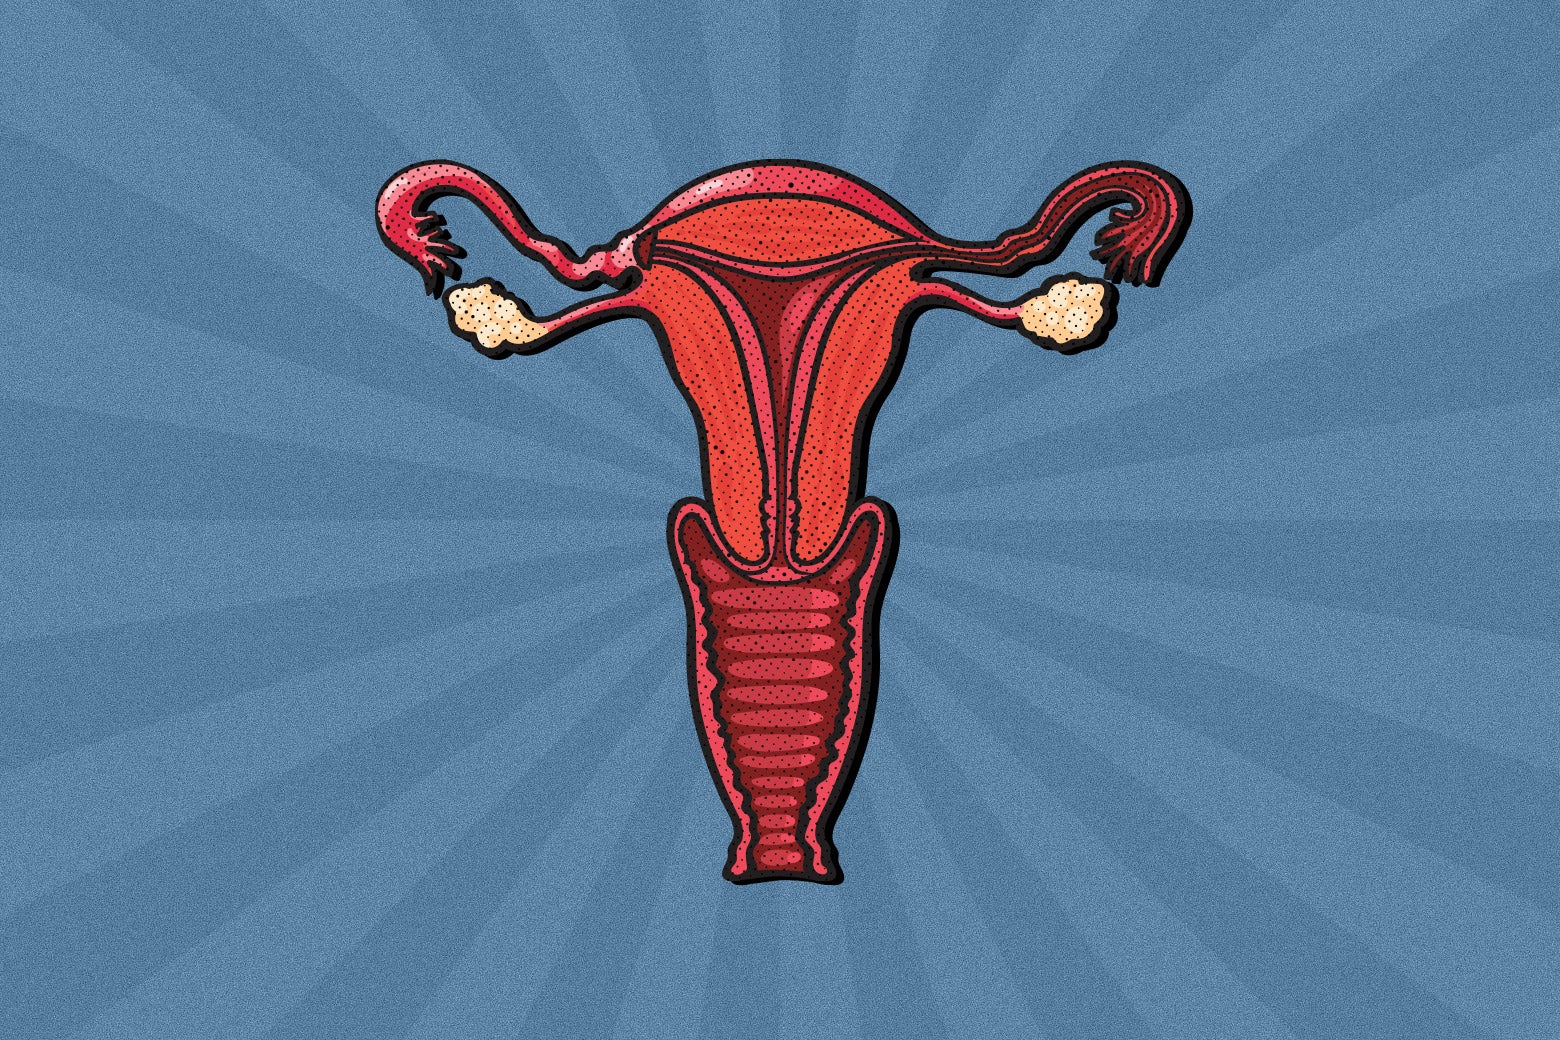 An illustration of a uterus.